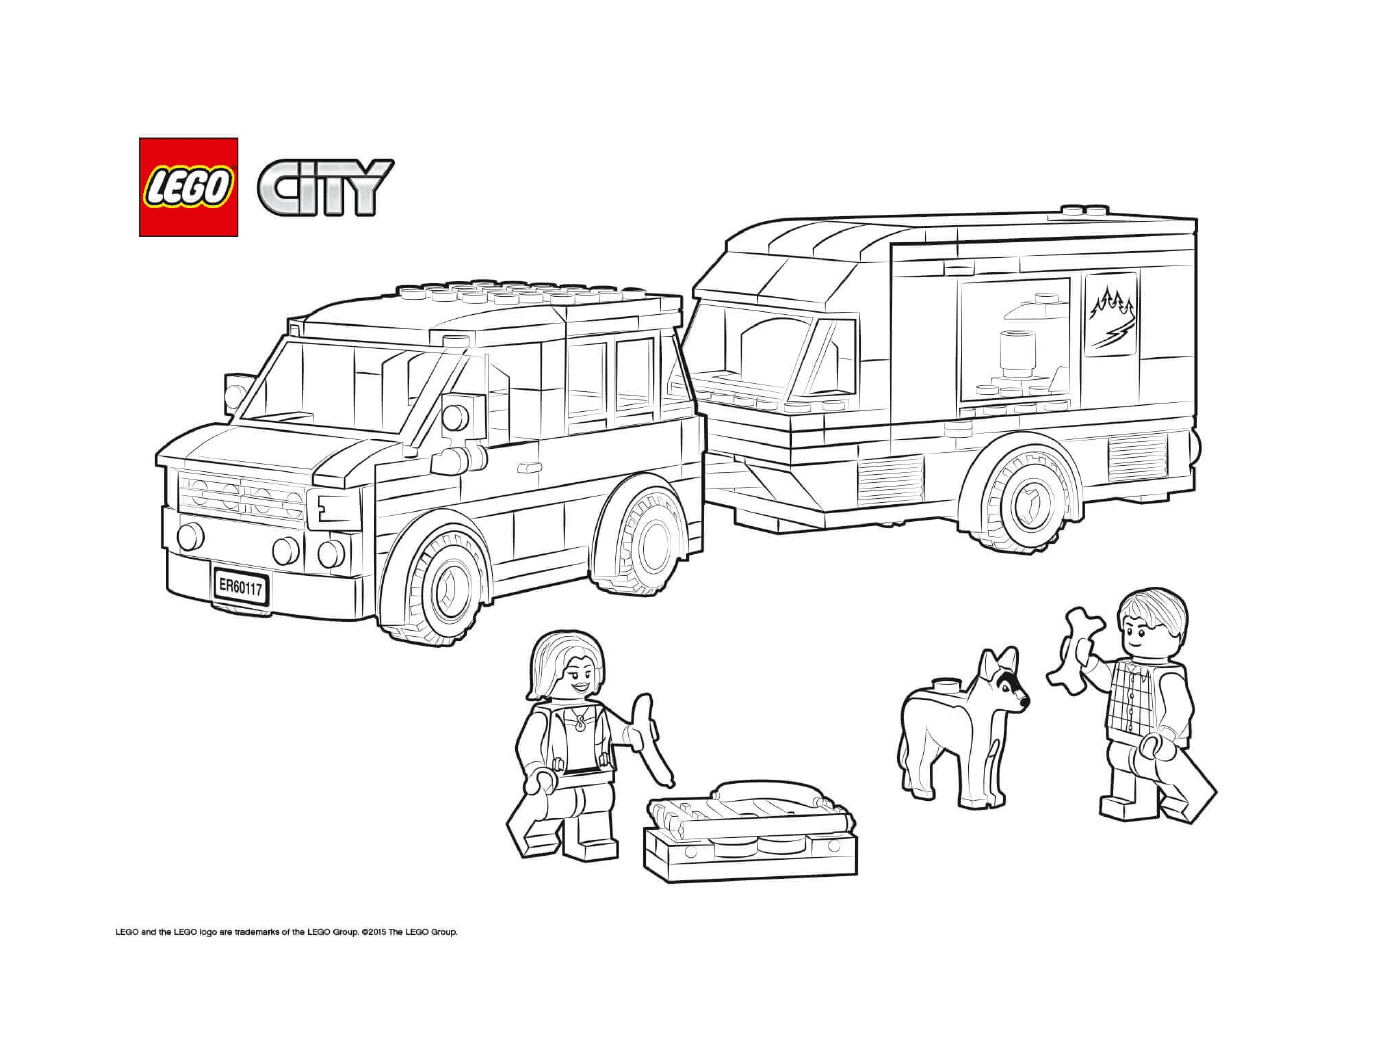  Van y caravana de Lego City 